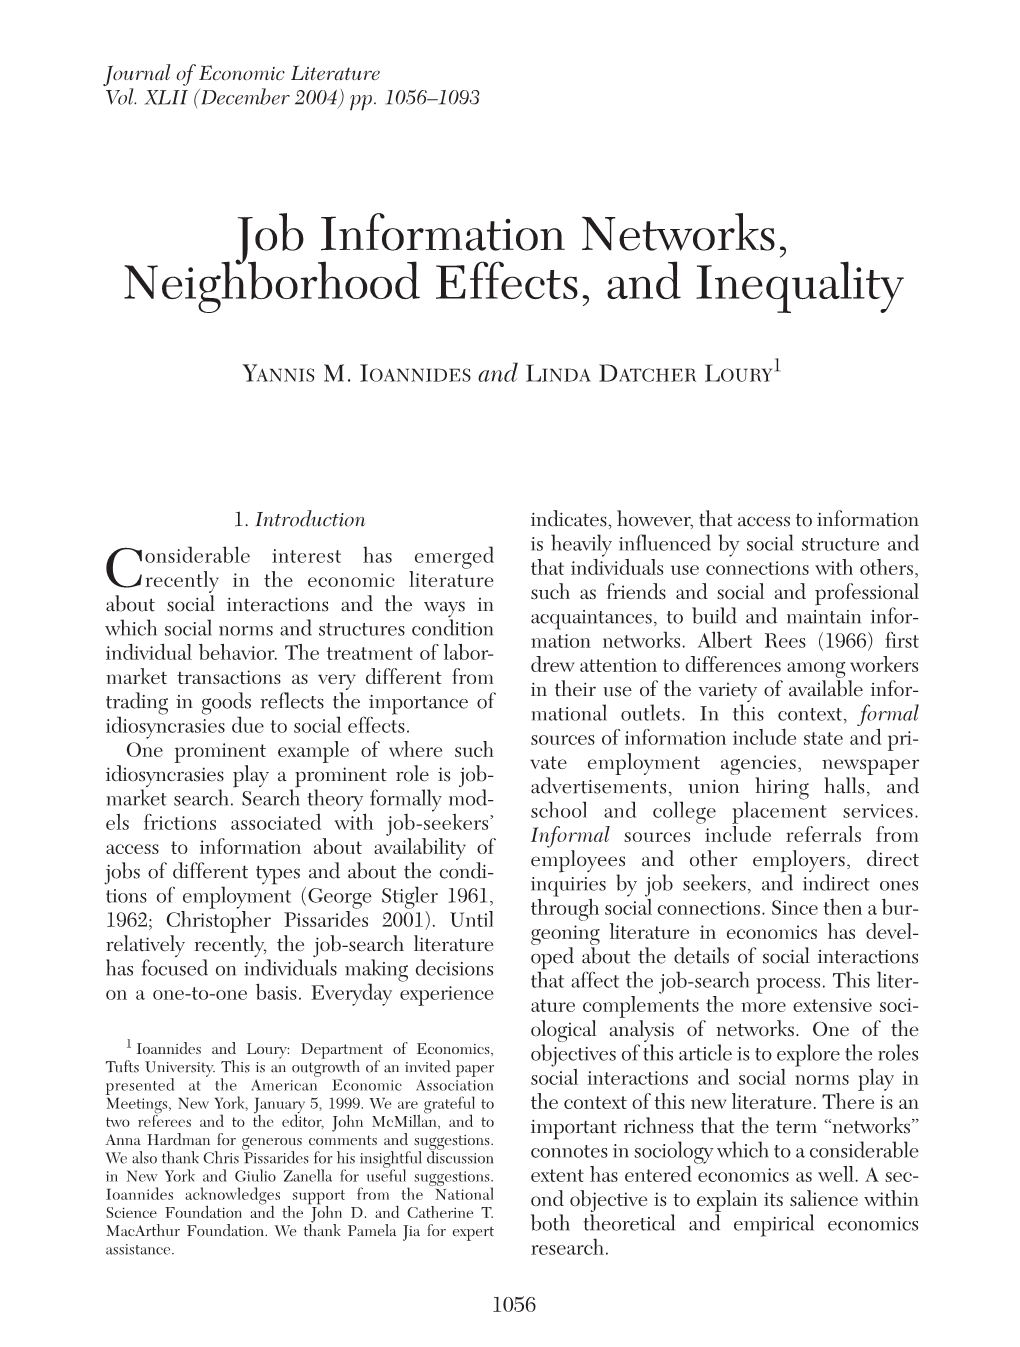 Job Information Networks, Neighborhood Effects, and Inequality